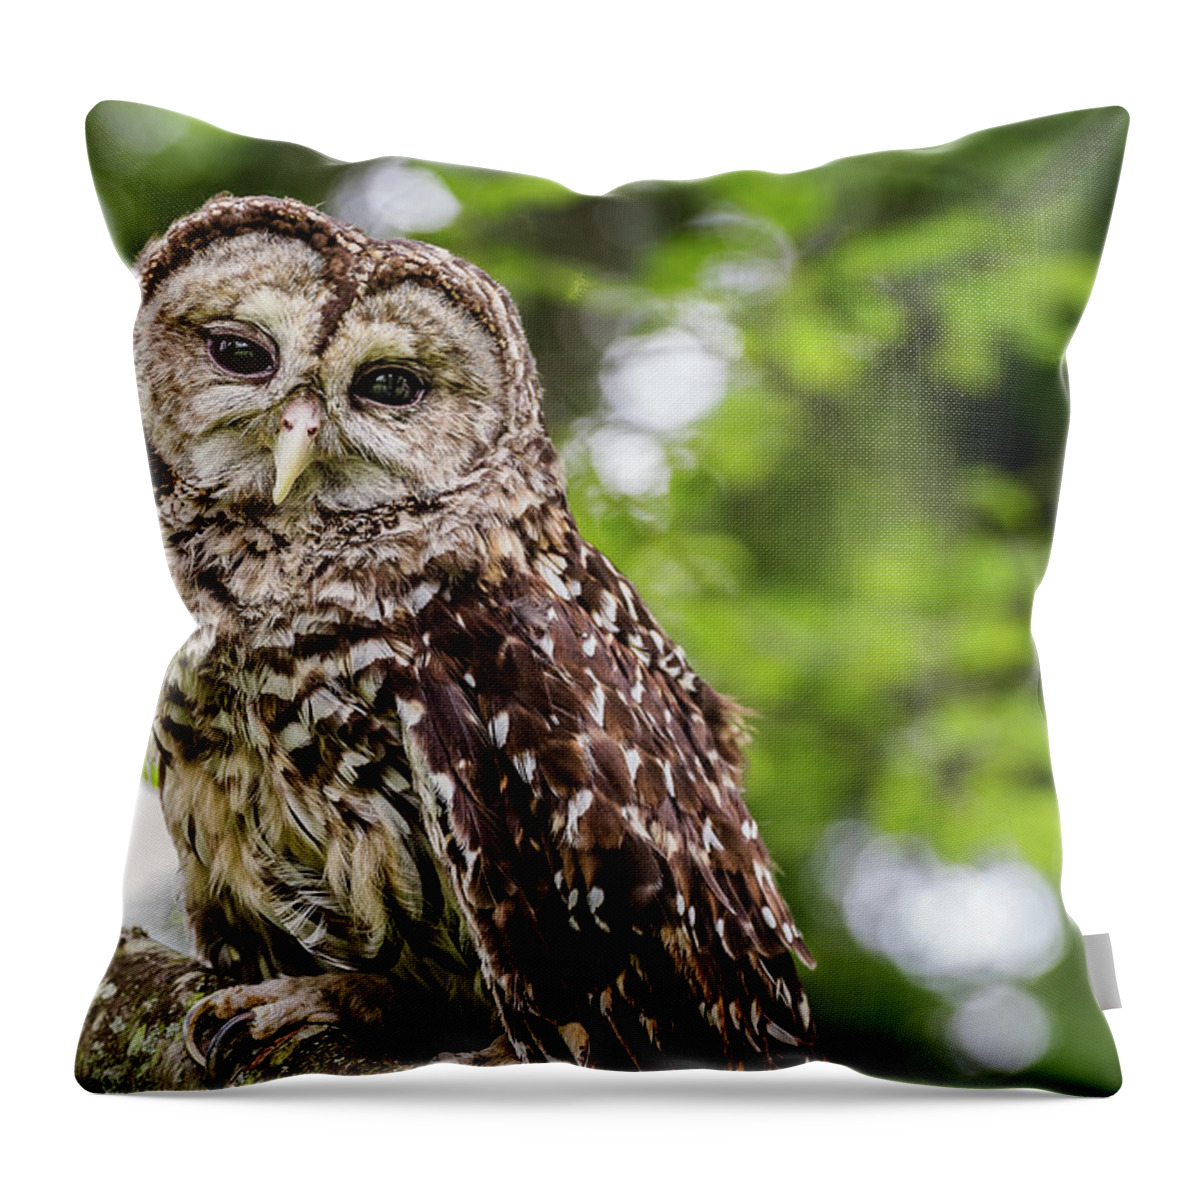 Raptors Owl Throw Pillow featuring the photograph Owl by Robert Miller